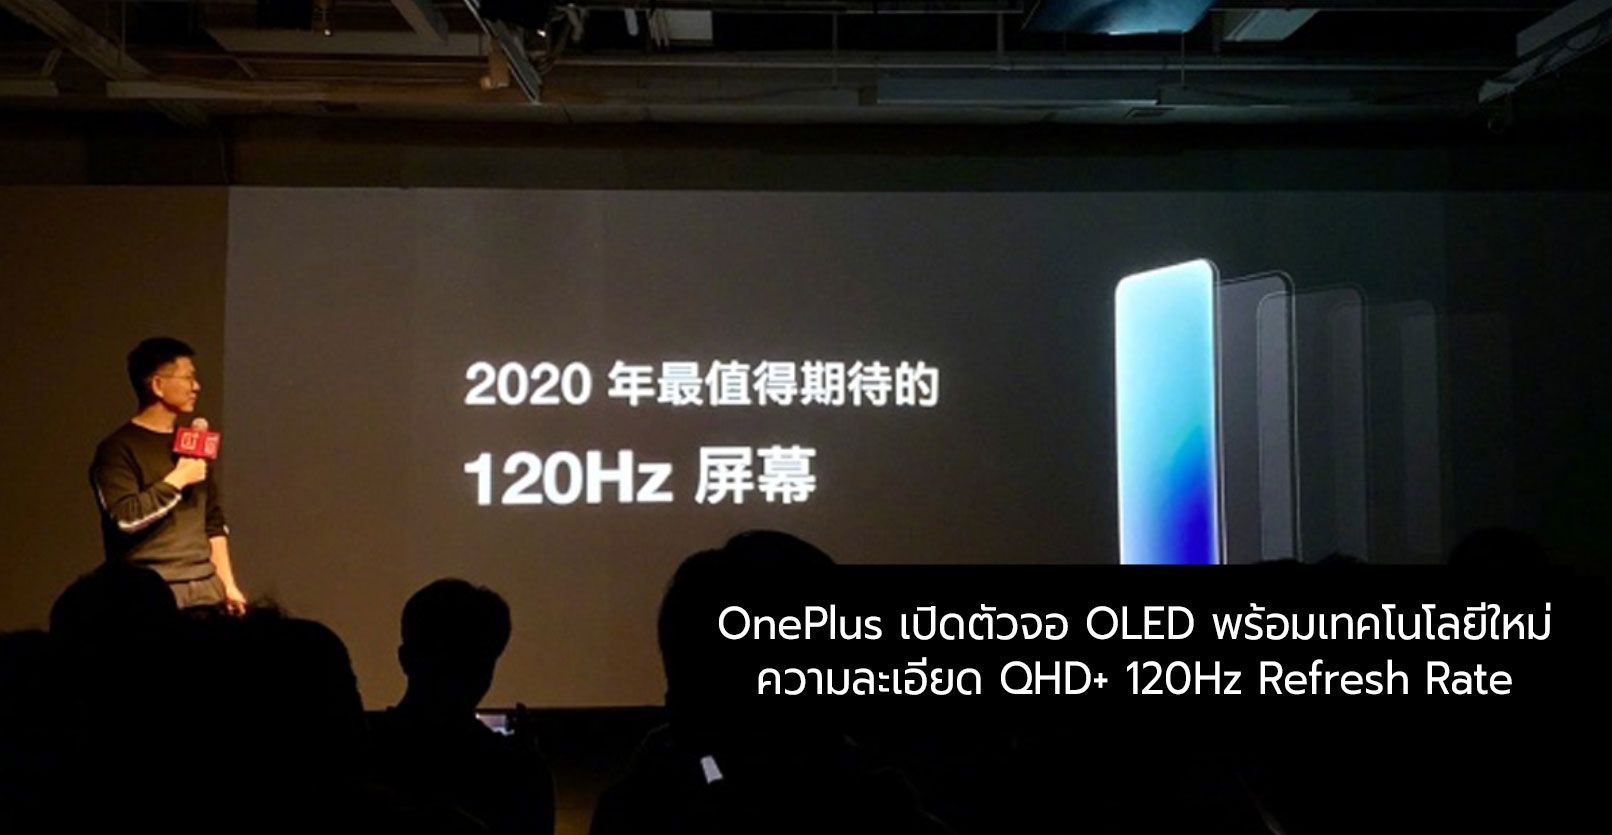 OnePlus เปิดตัวหน้าจอ OLED ใหม่ ความละเอียด Quad HD+ 120 Hz คาดนำไปใช้กับ OnePlus 8 Pro